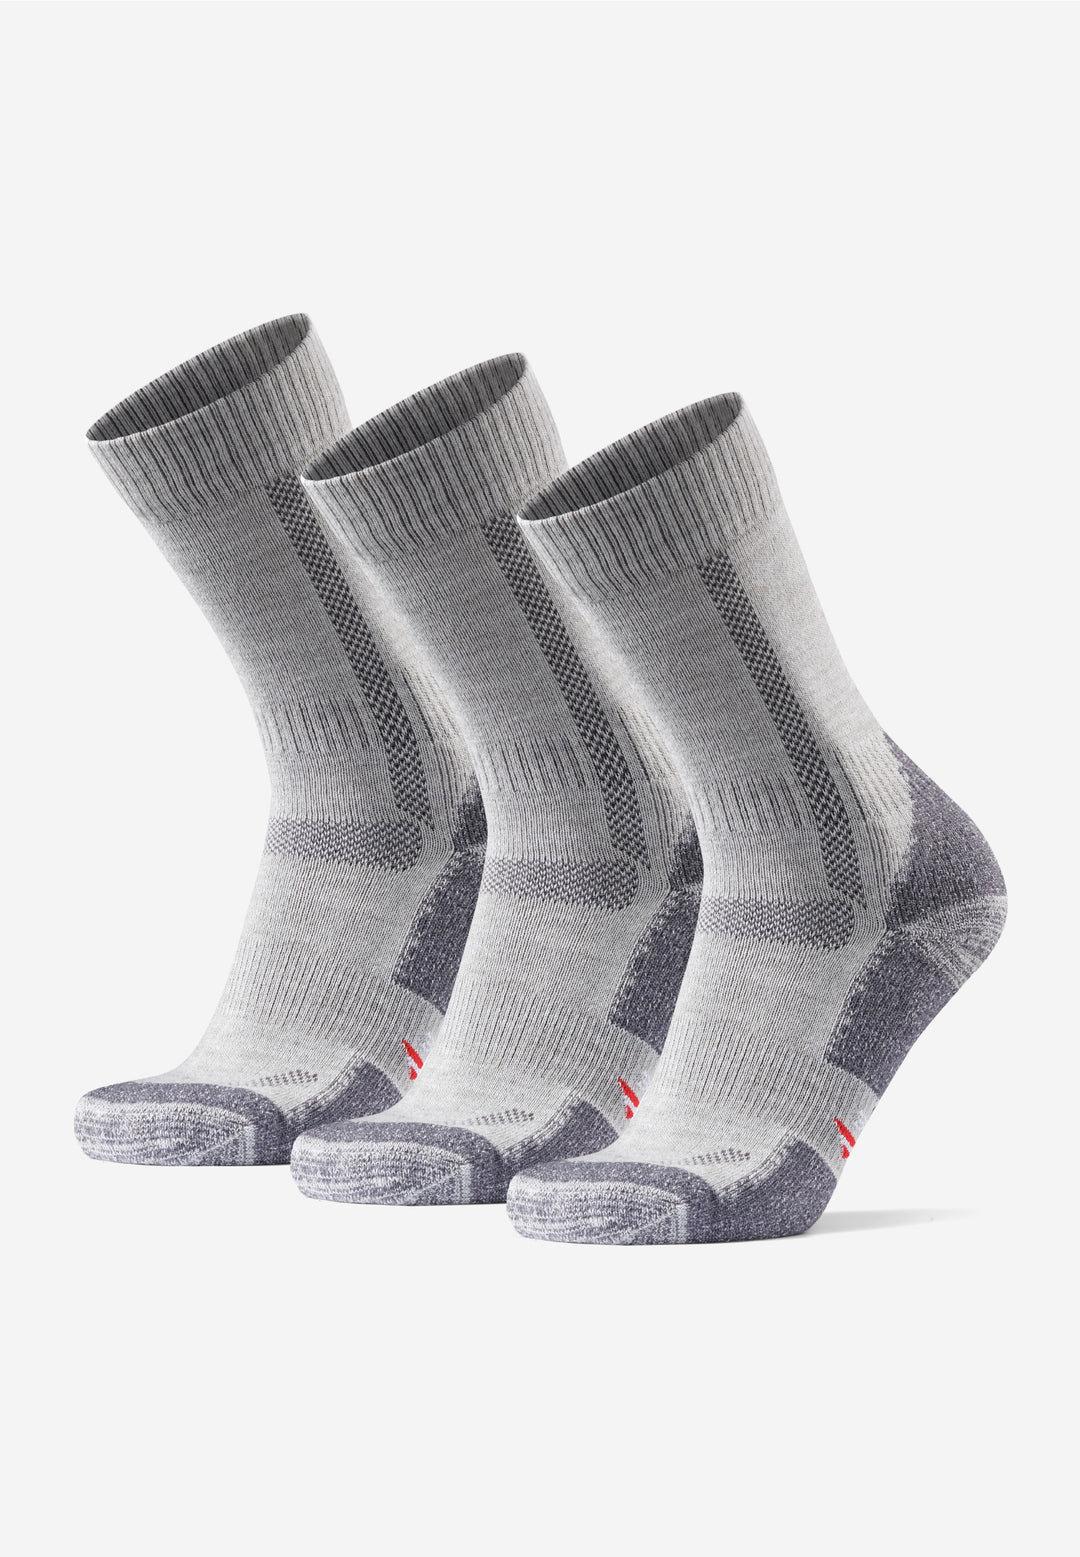 DANISH ENDURANCE Merino Wool Cushioned Hiking Socks 3-Pack for Men XL Gray  Color